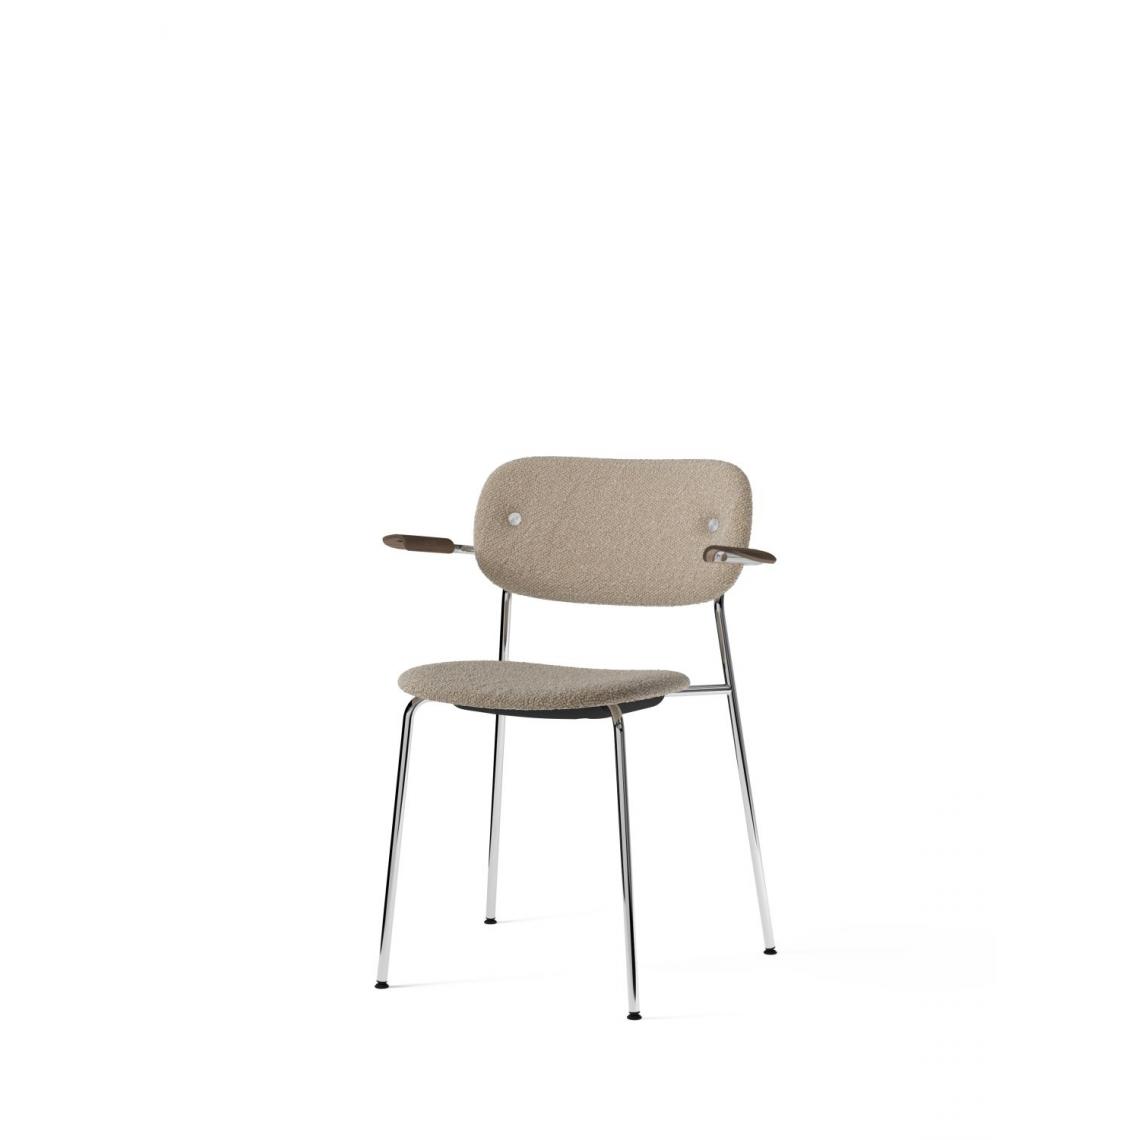 Menu - Co Dining Chair avec accoudoir - chrome - MenuCoChairLupoSand - chêne, teinté foncé - Chaises